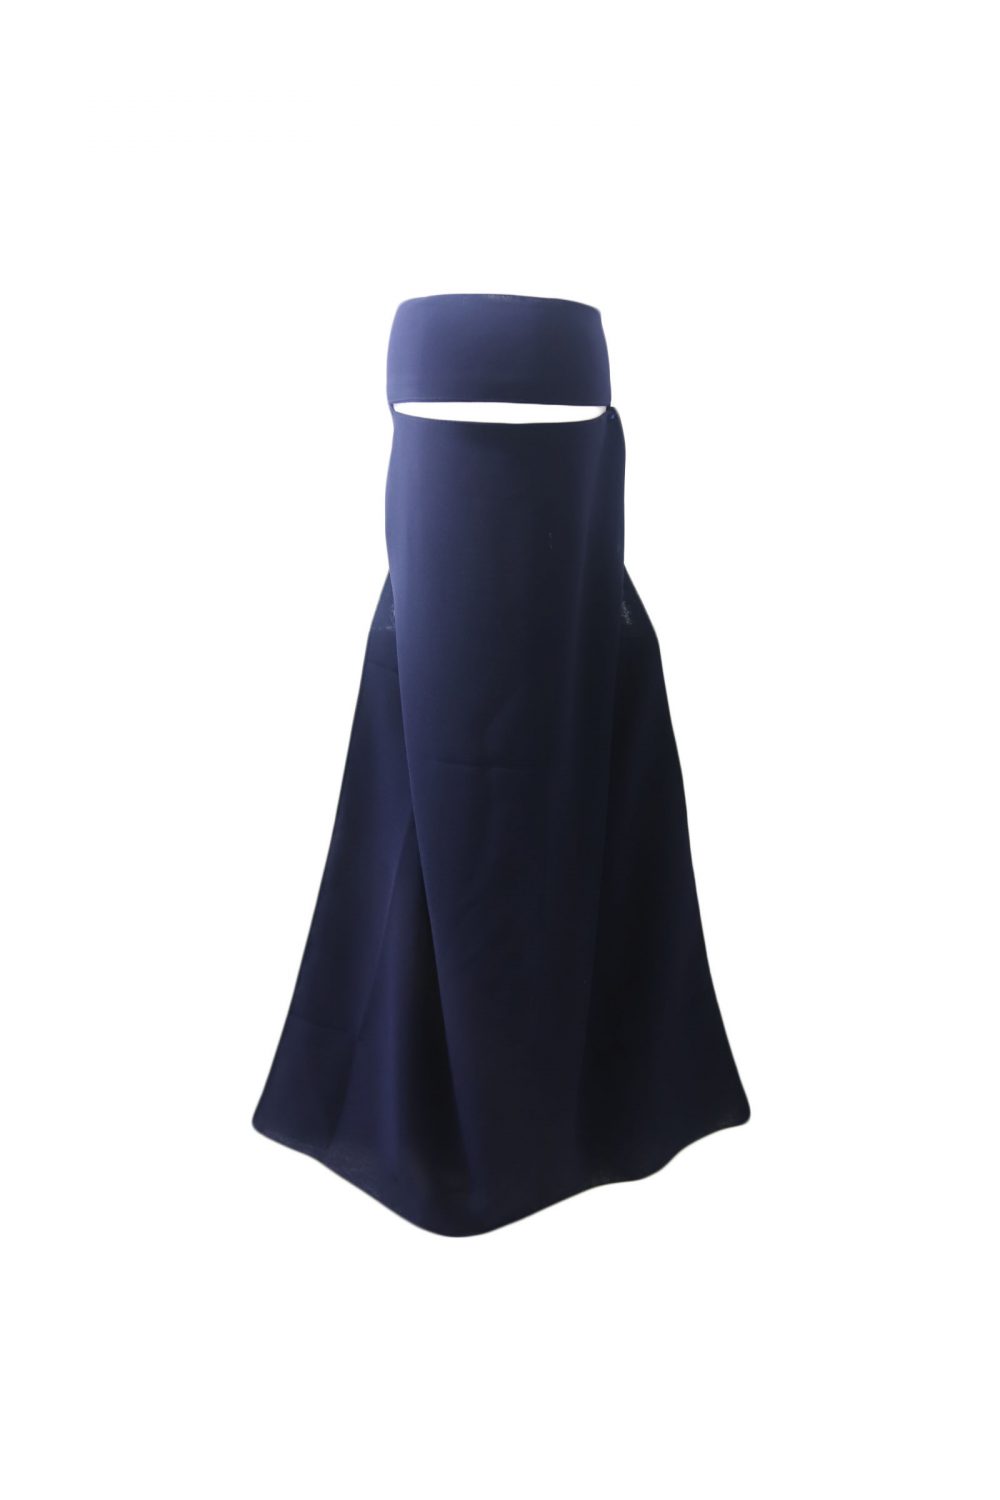 Niqab burqa for Muslim women. Shop for niqabs online. Shop for niqabs online.